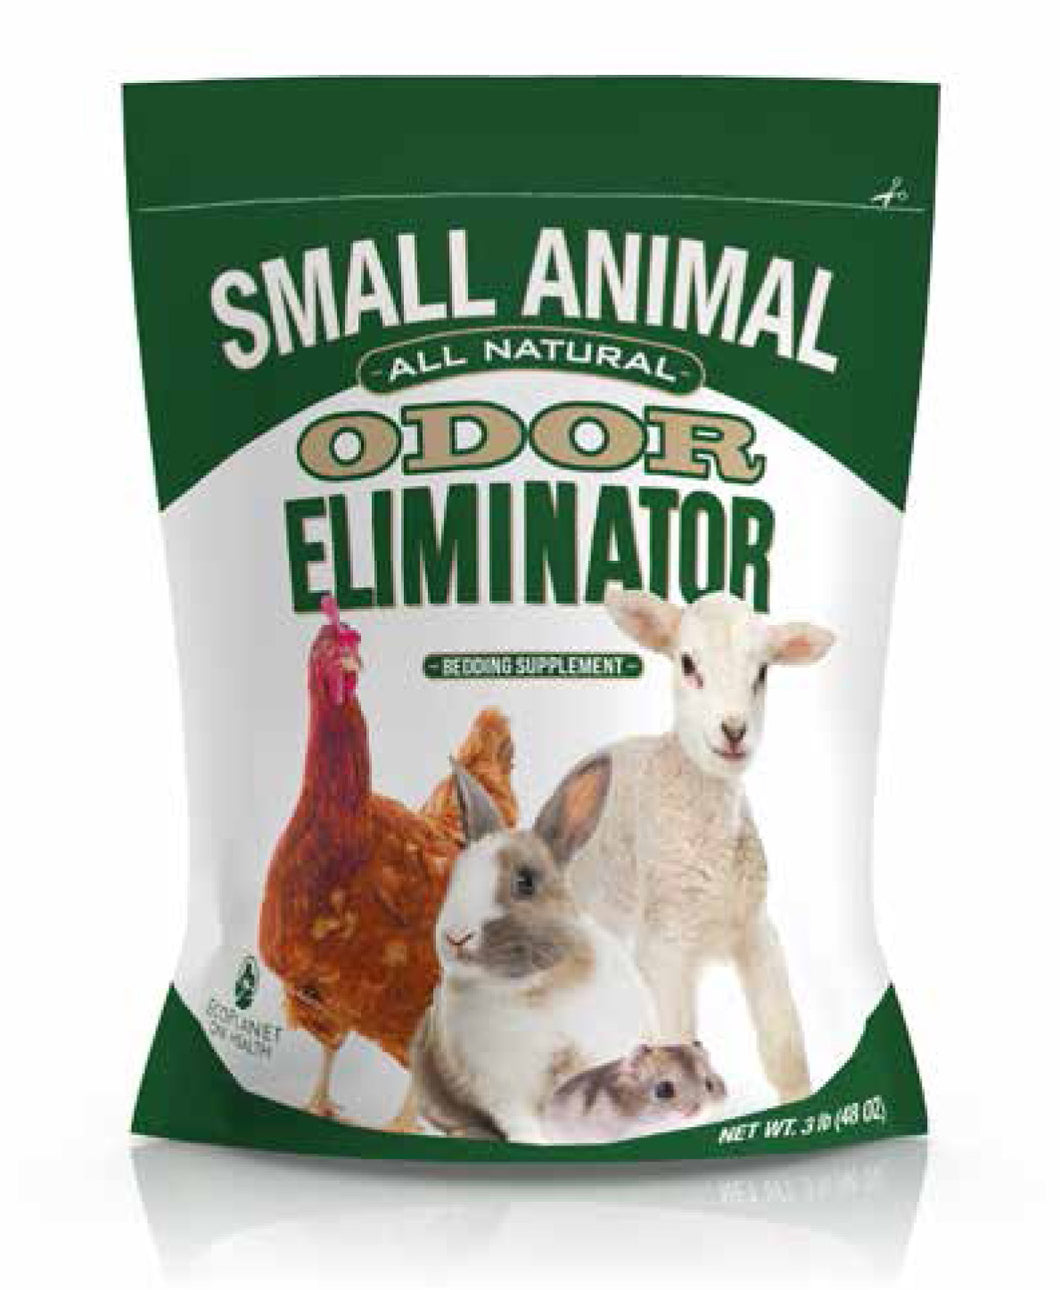 Small Animal Odor Eliminator